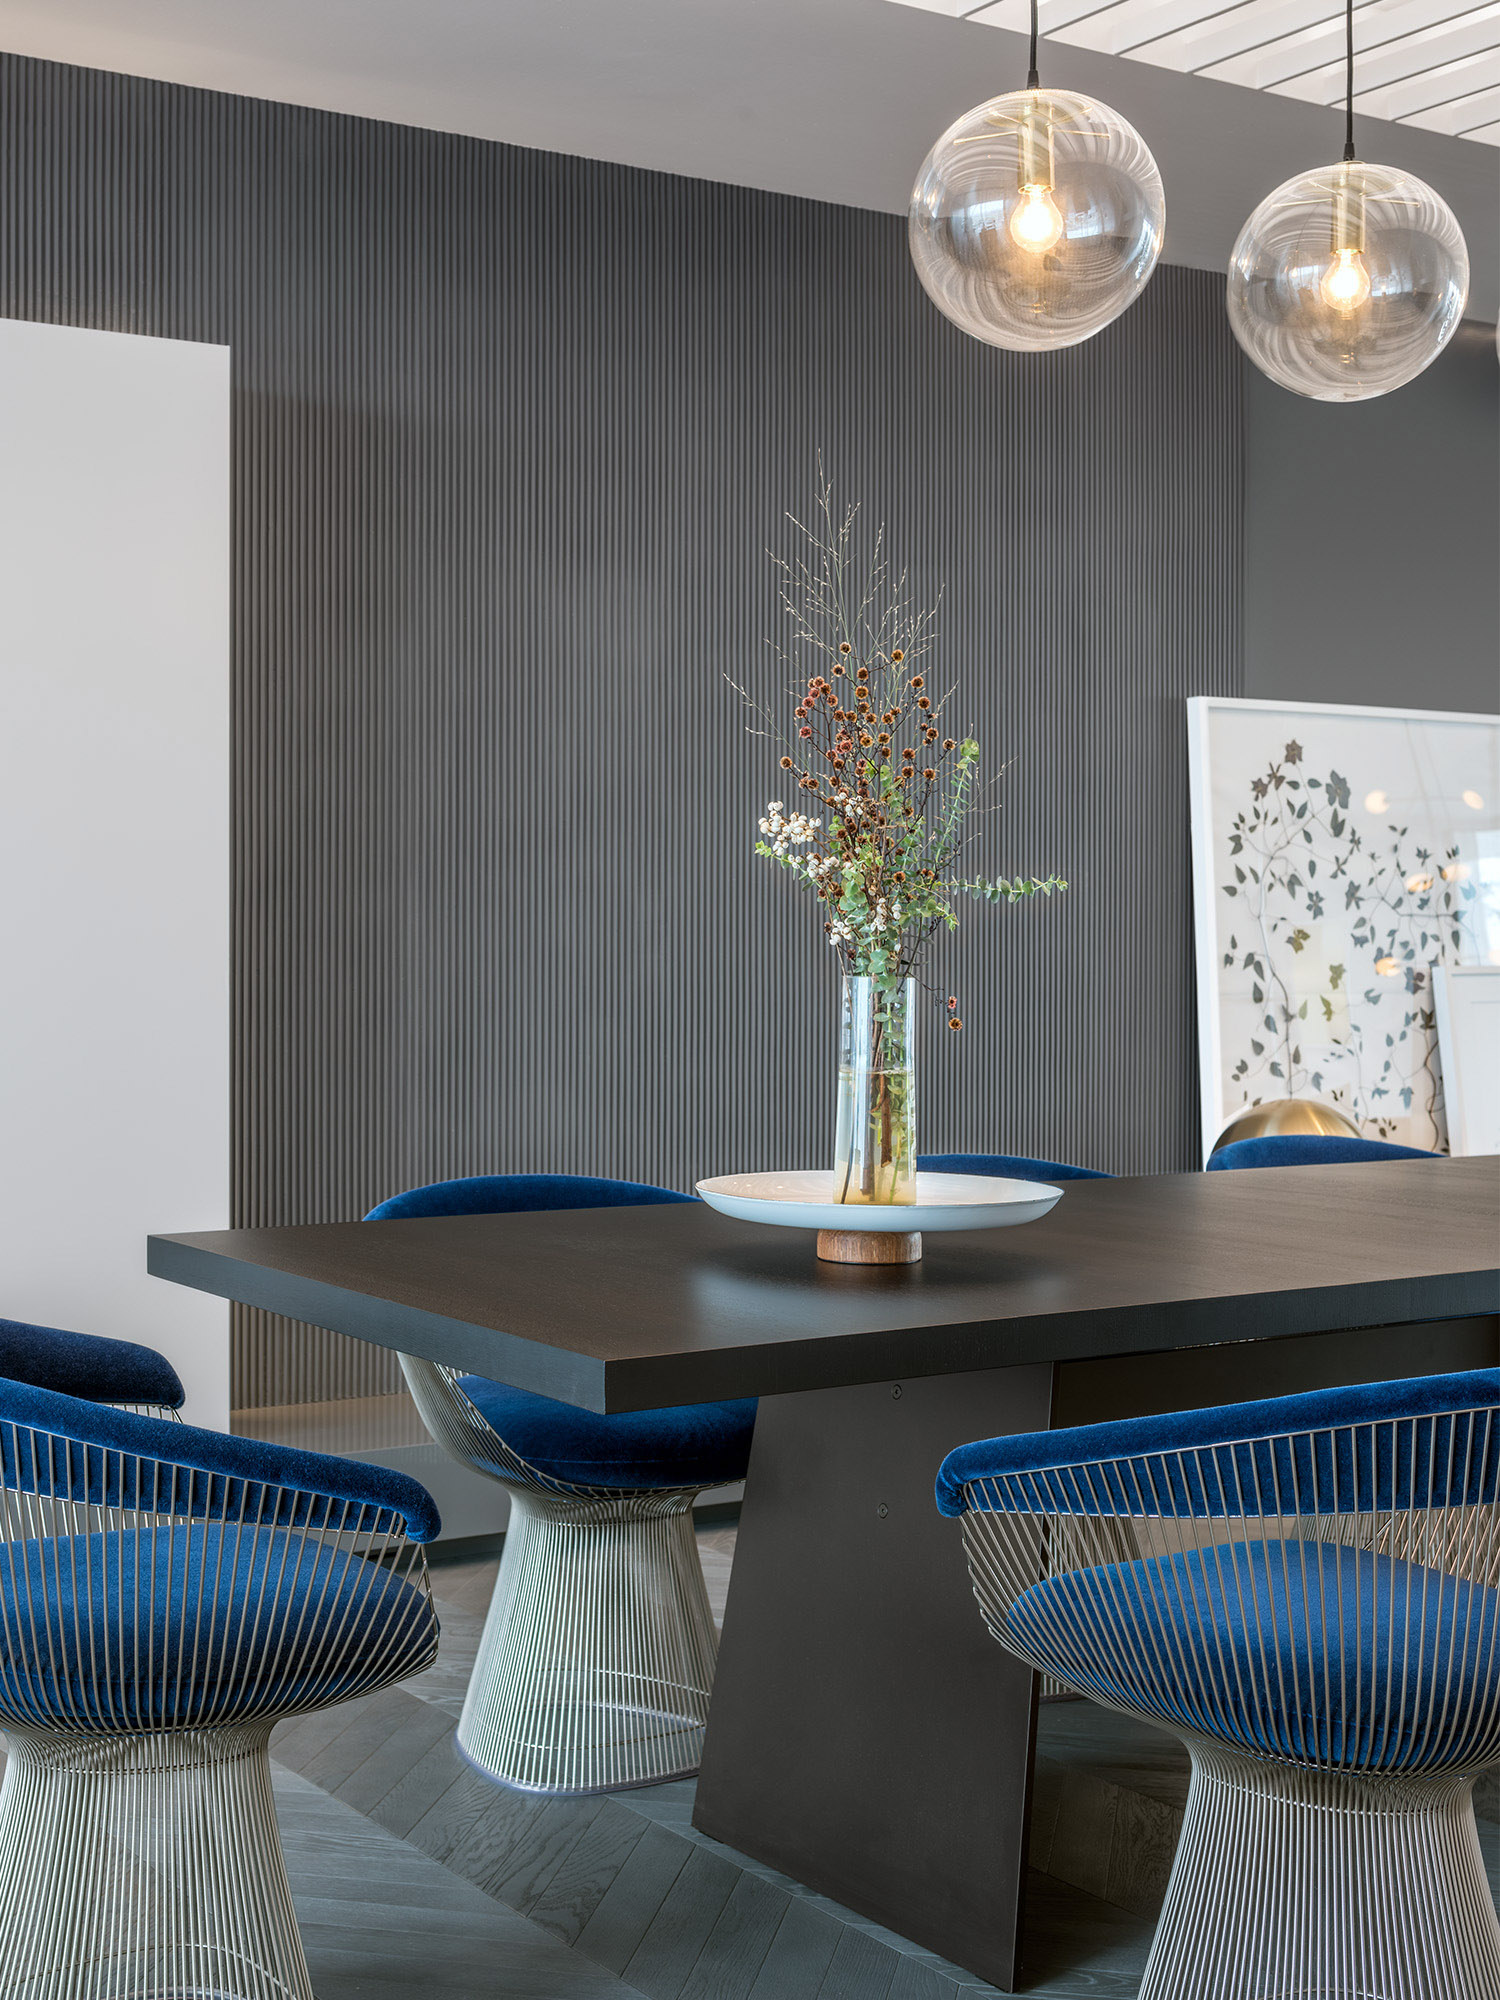 Shades of Grey Apartment Interior Design Shanghai, China - Ippolito Fleitz Group - Dining Room Table